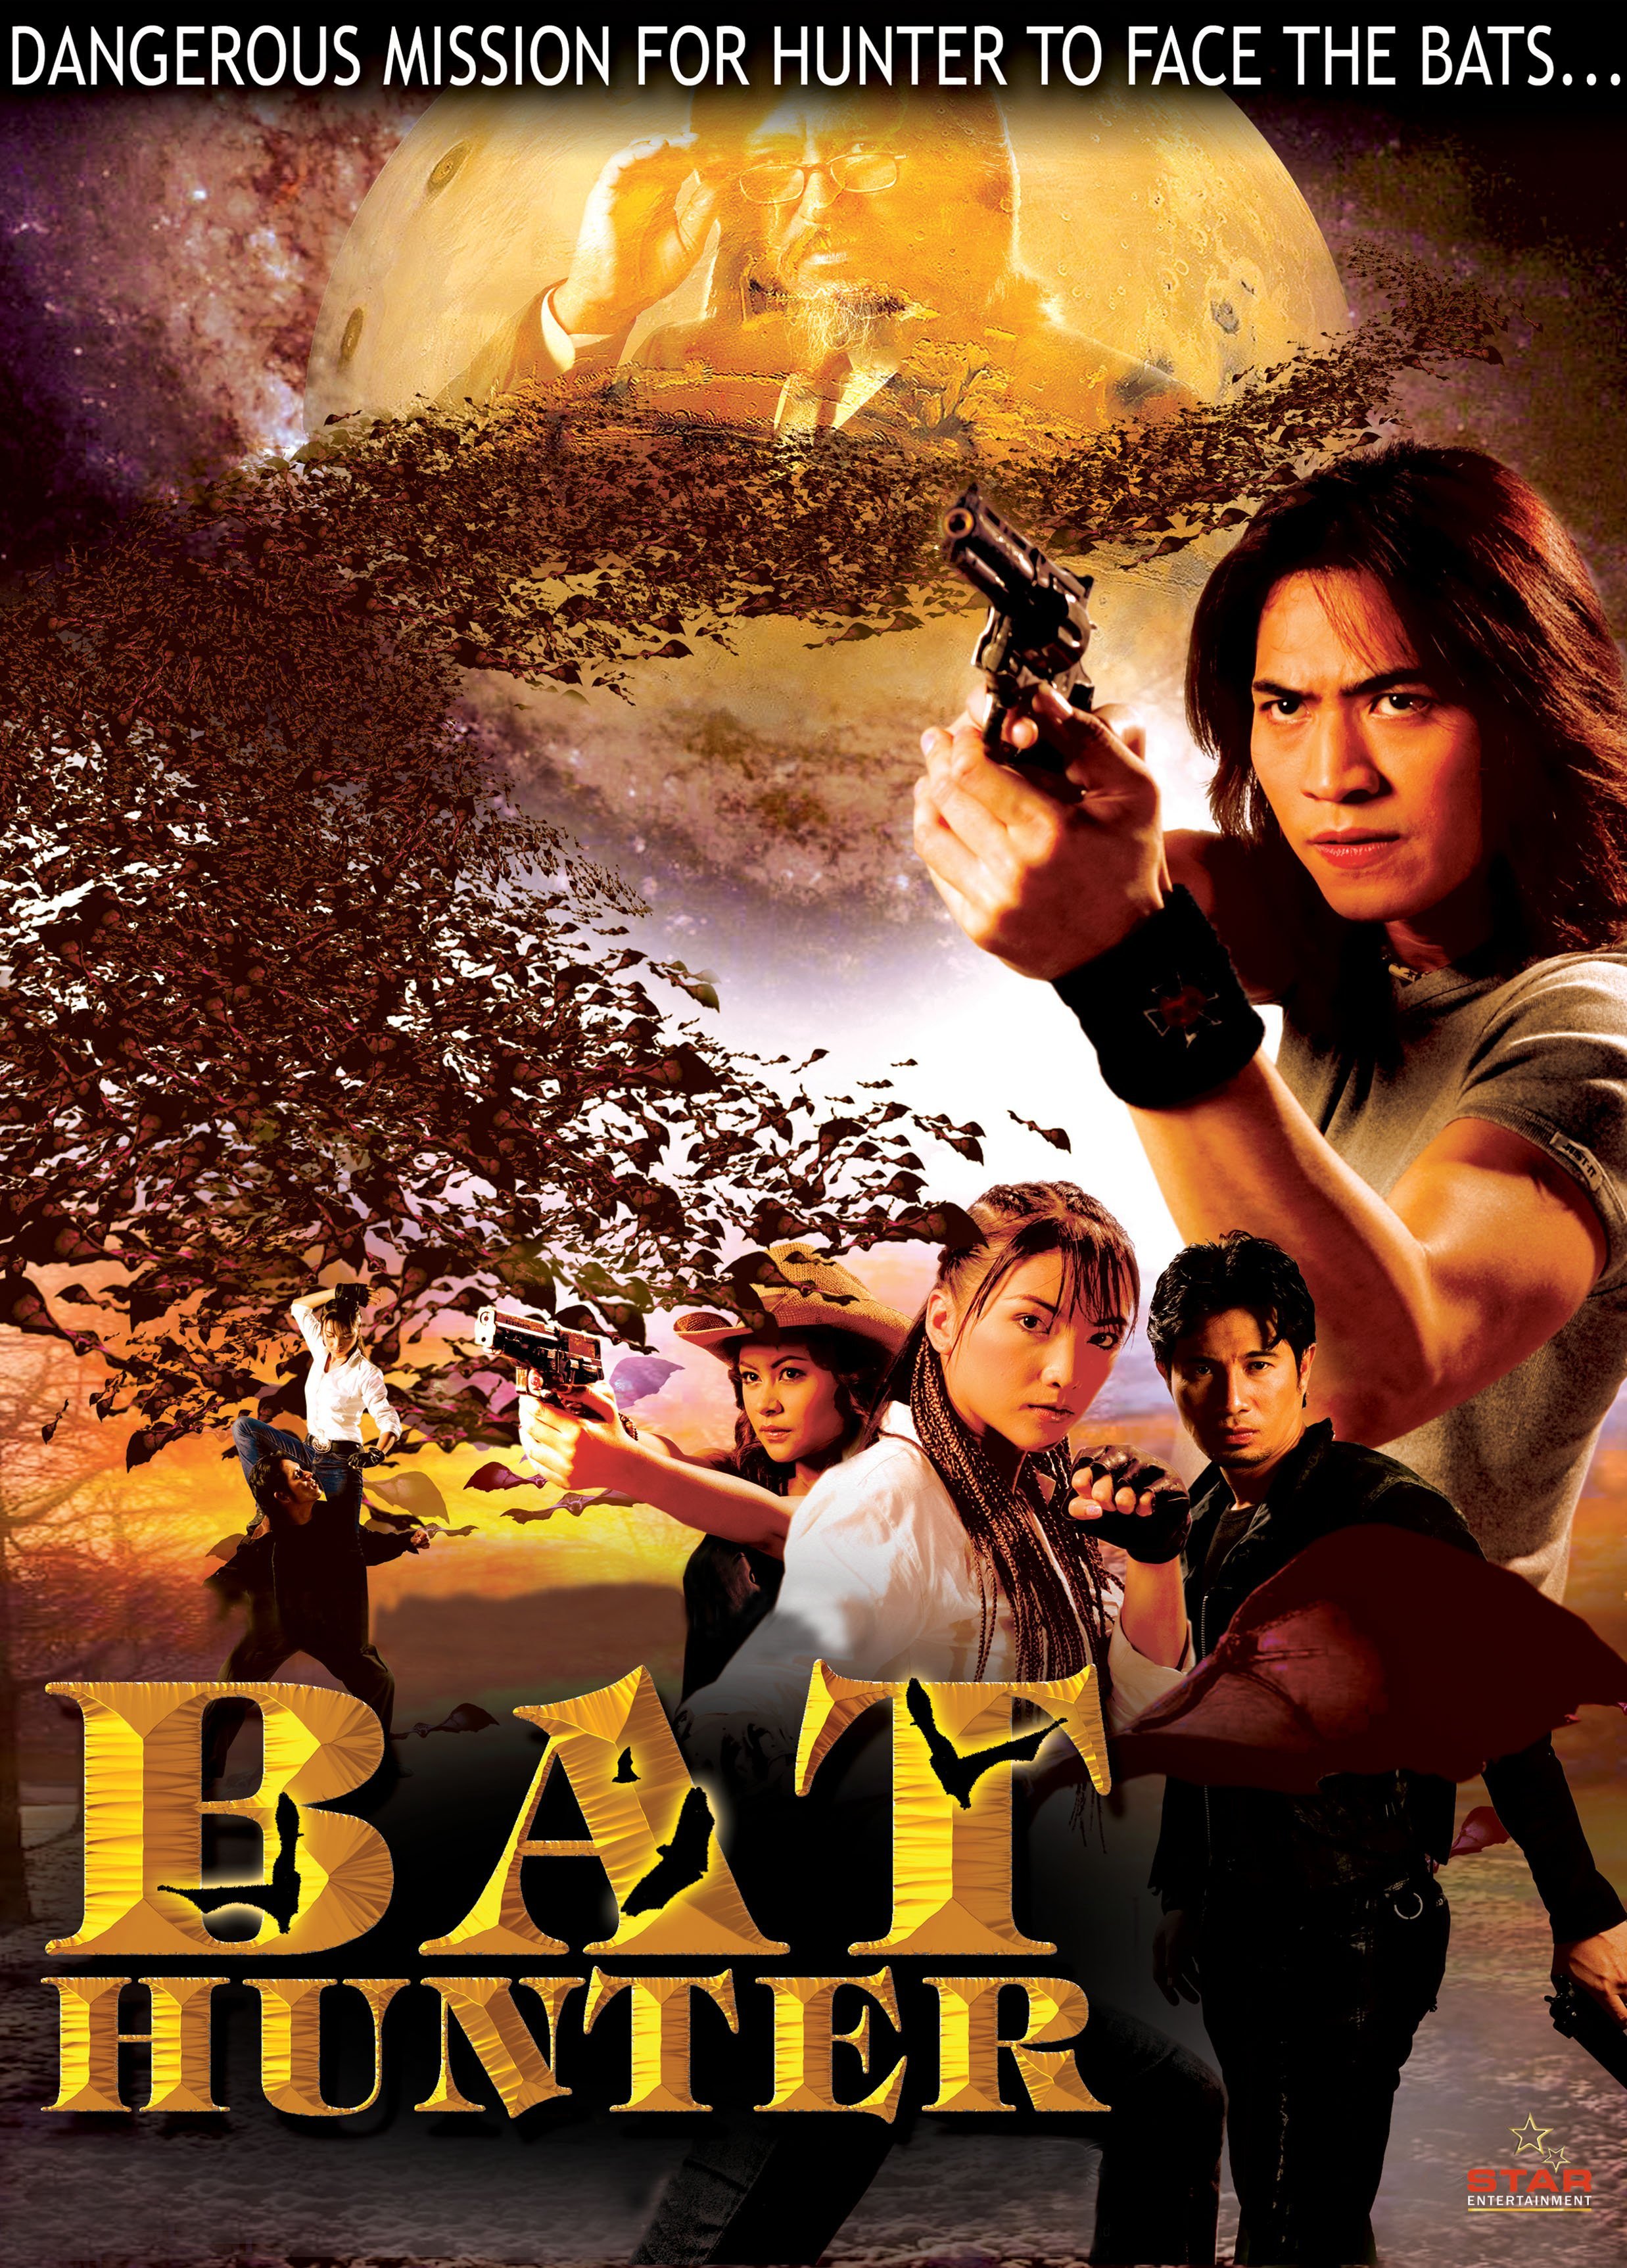 Bat Hunter (2006) with English Subtitles on DVD on DVD